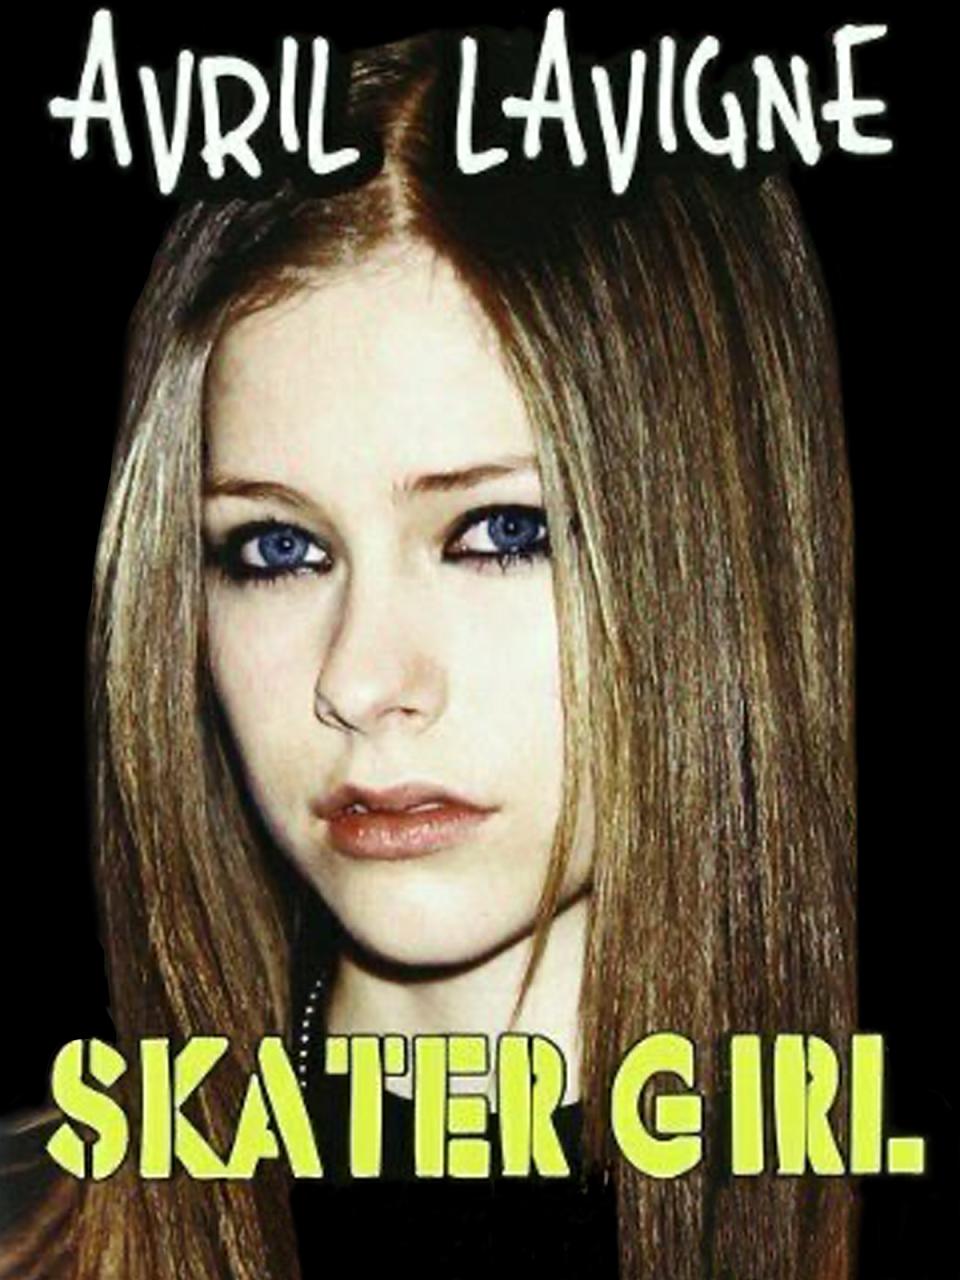 Avril Lavigne - Skater Girl Unauthorized